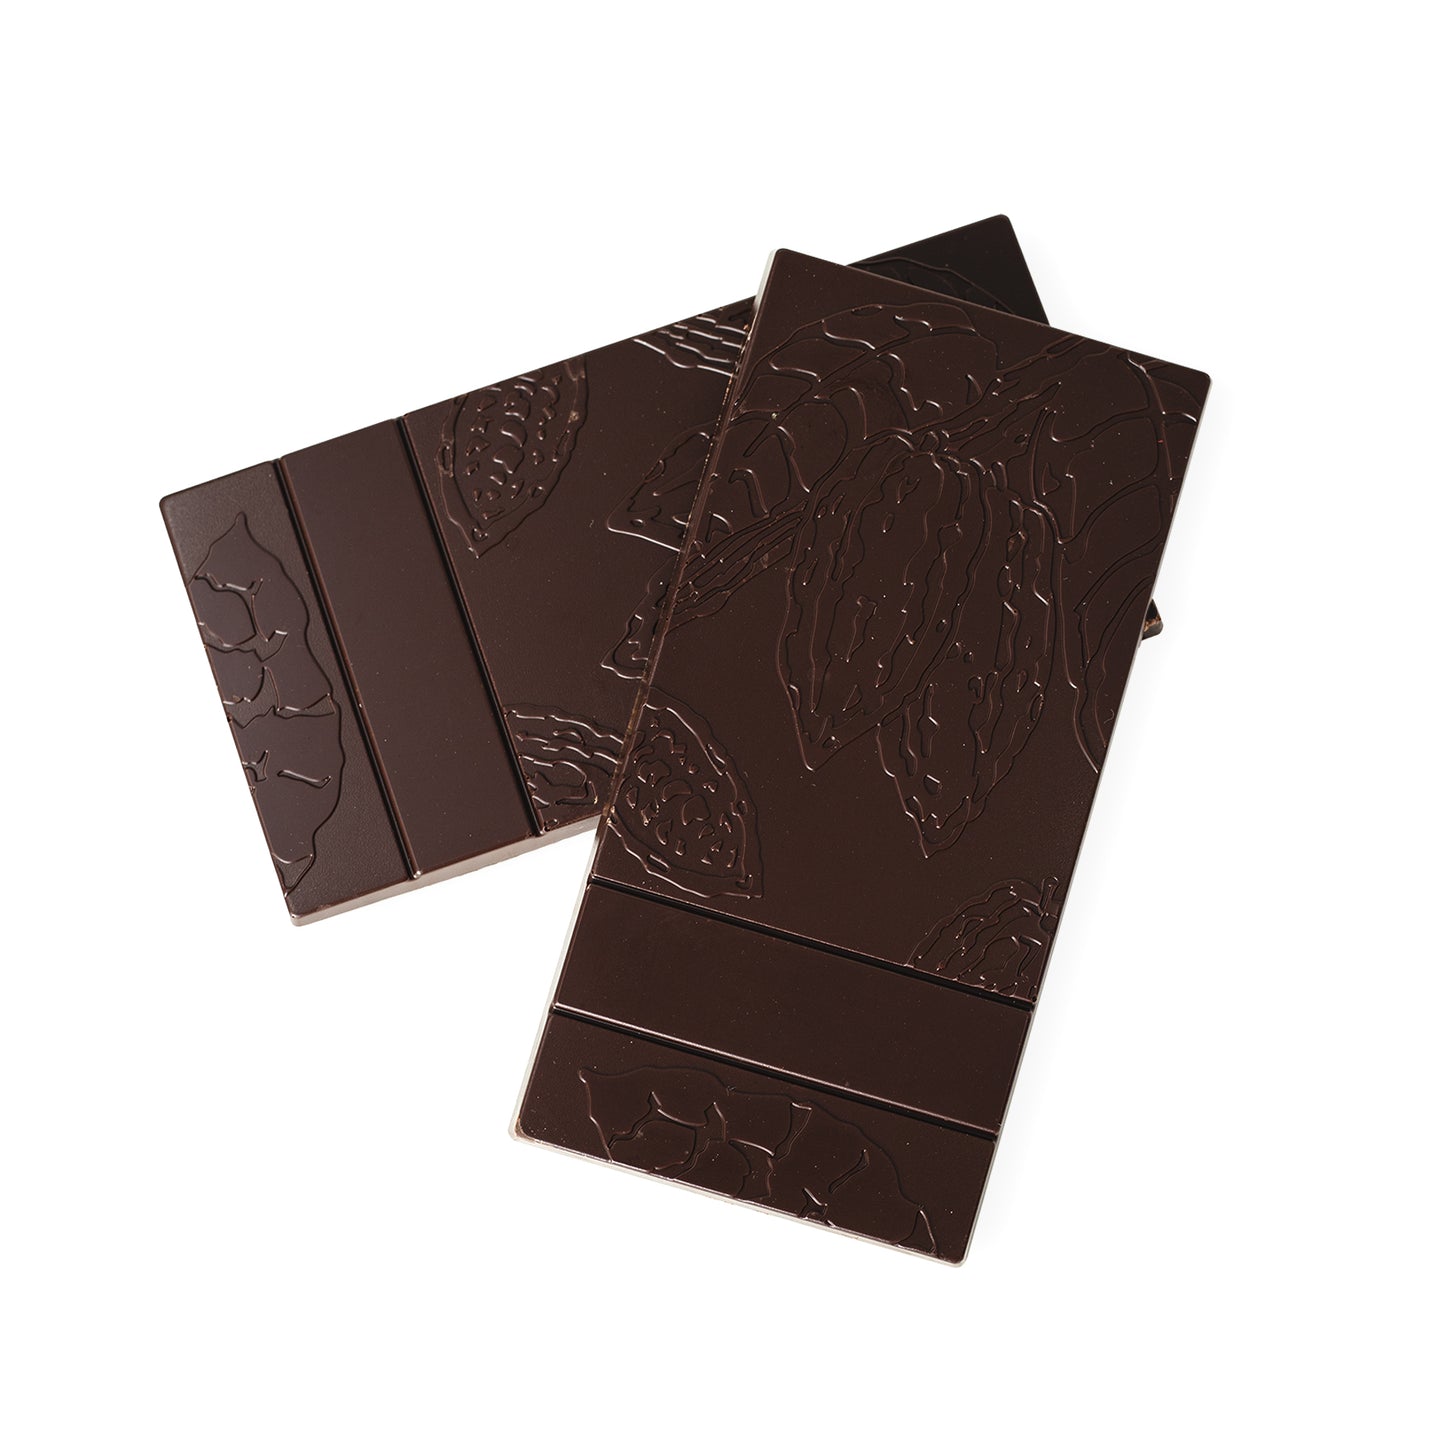 Agostoni Chocolate Tablette